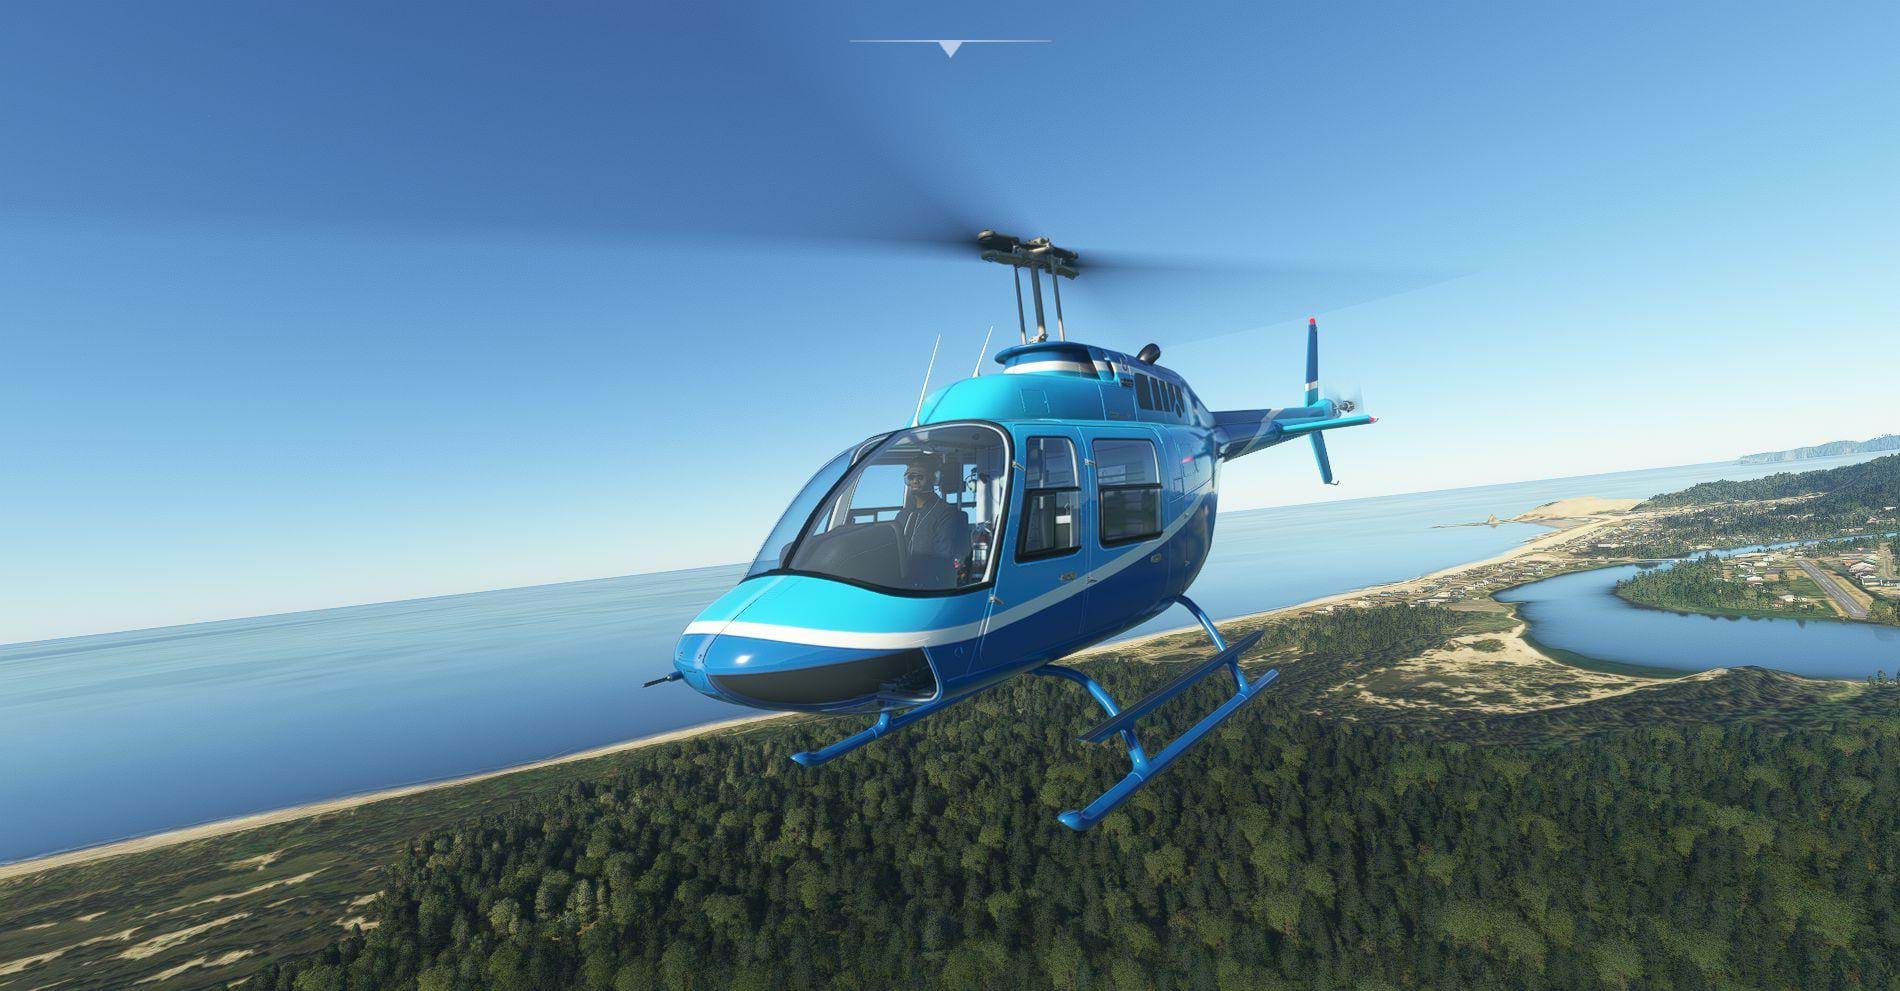 A Pilot's Review of Microsoft Flight Simulator 2020